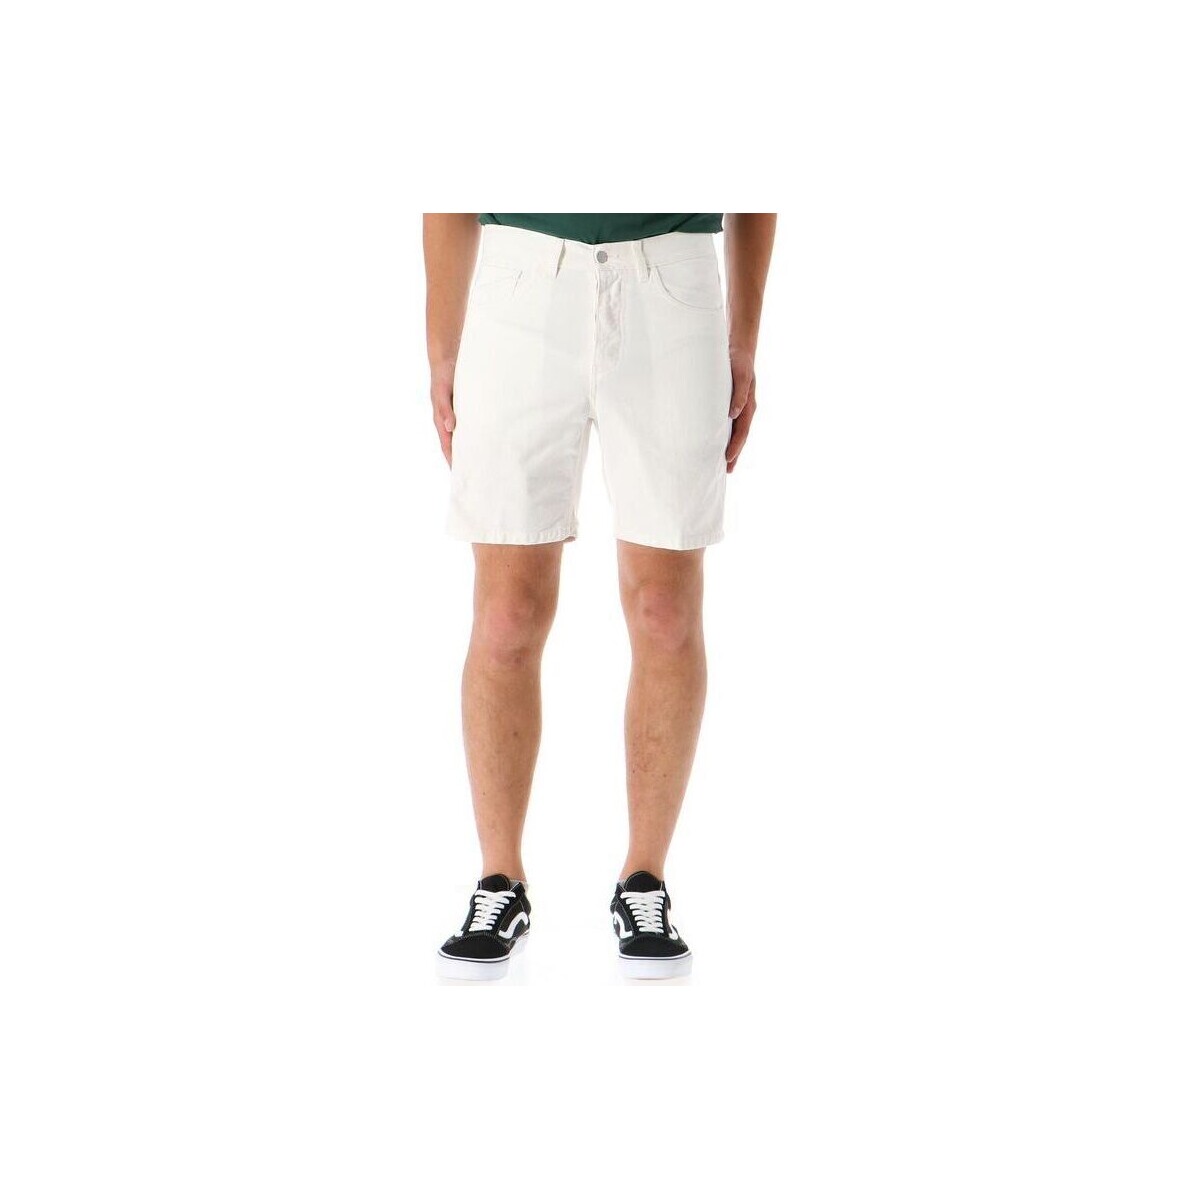 textil Shorts / Bermudas Carhartt Bermuda blanca Carhartt Newel Short Blanco